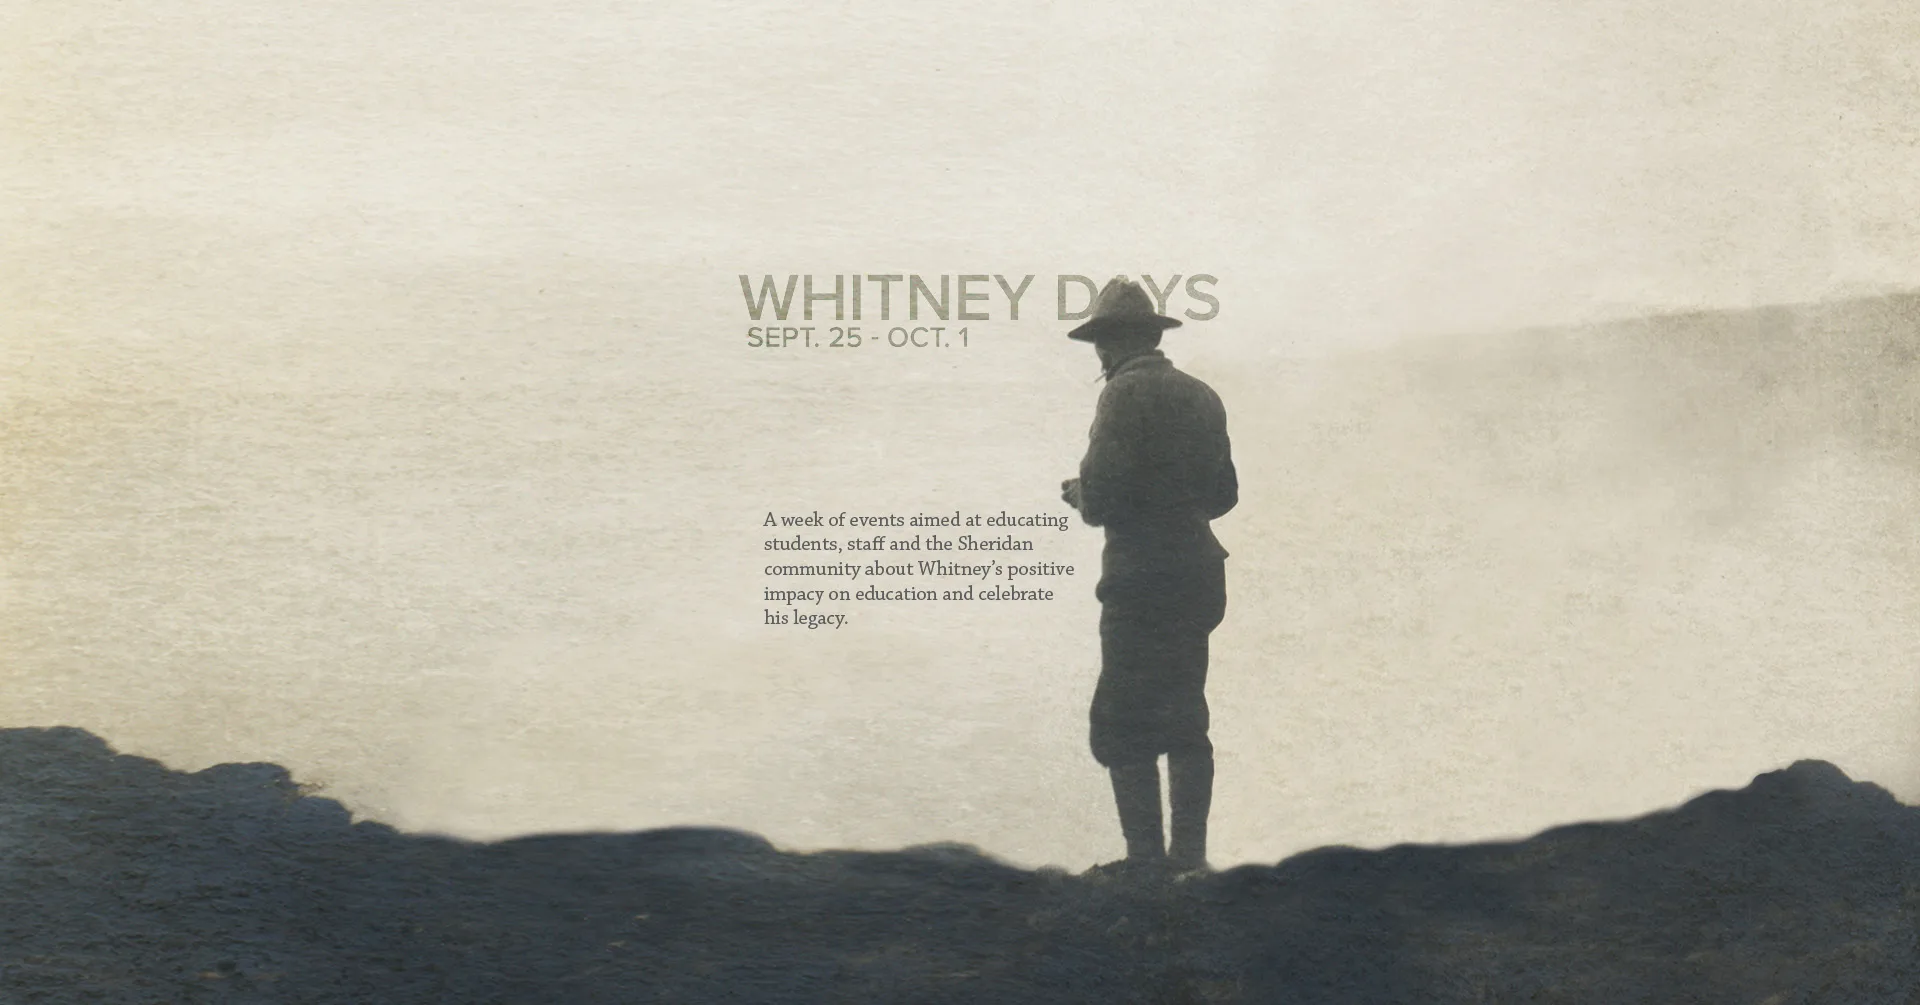 Whitney Days Events Image